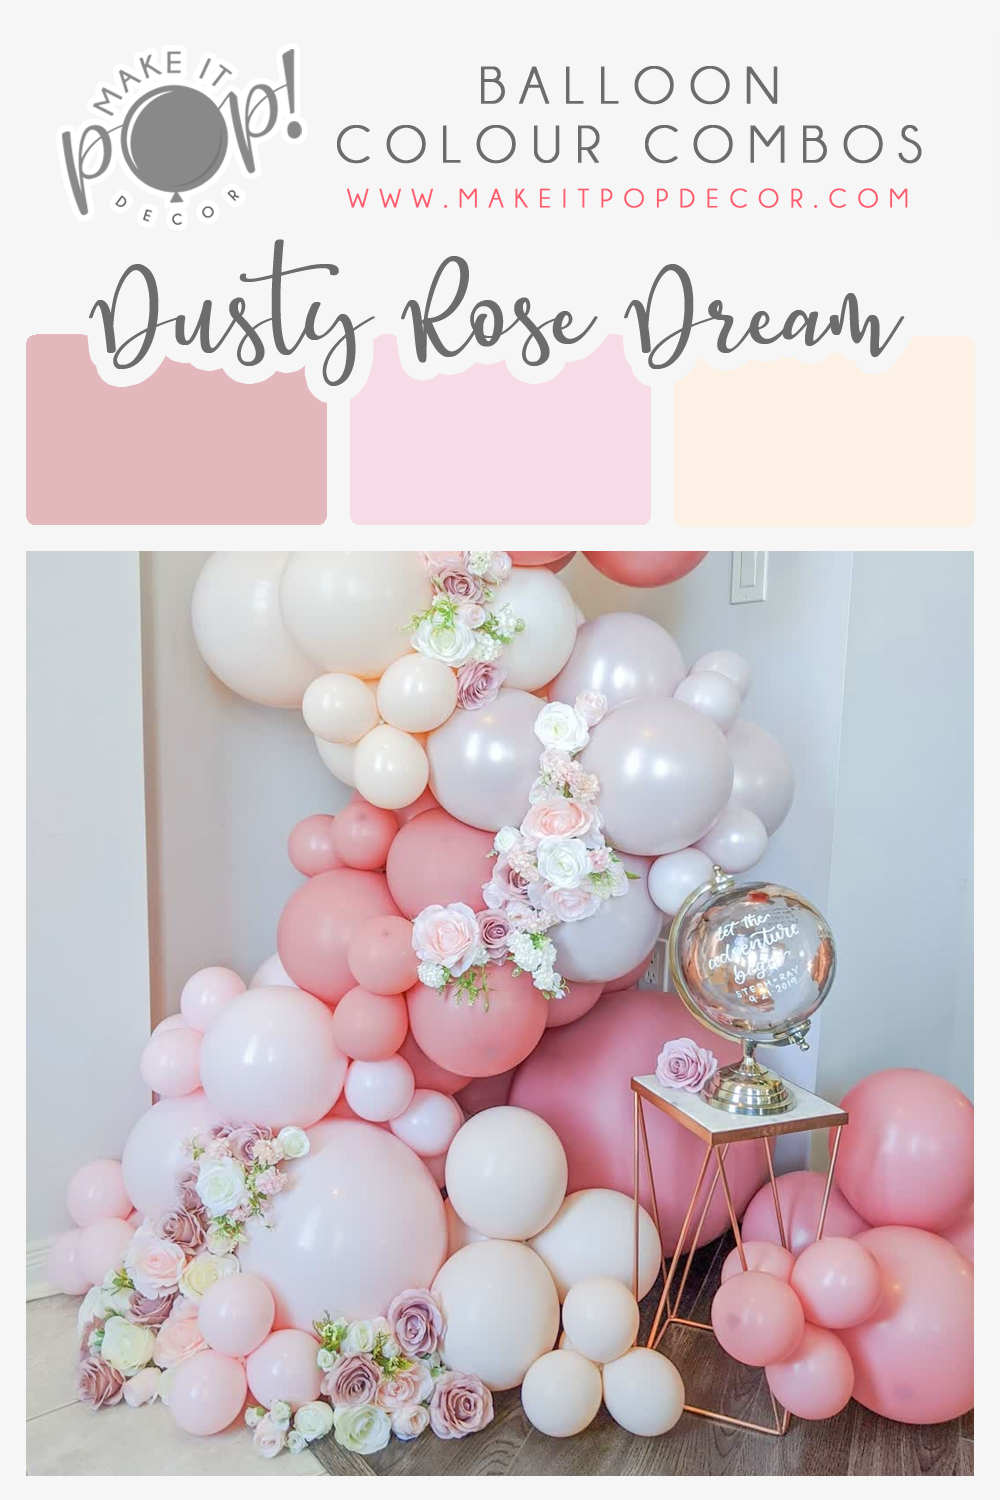 Make It Pop Decor - Dusty Rose Dream Balloon Colour Combo